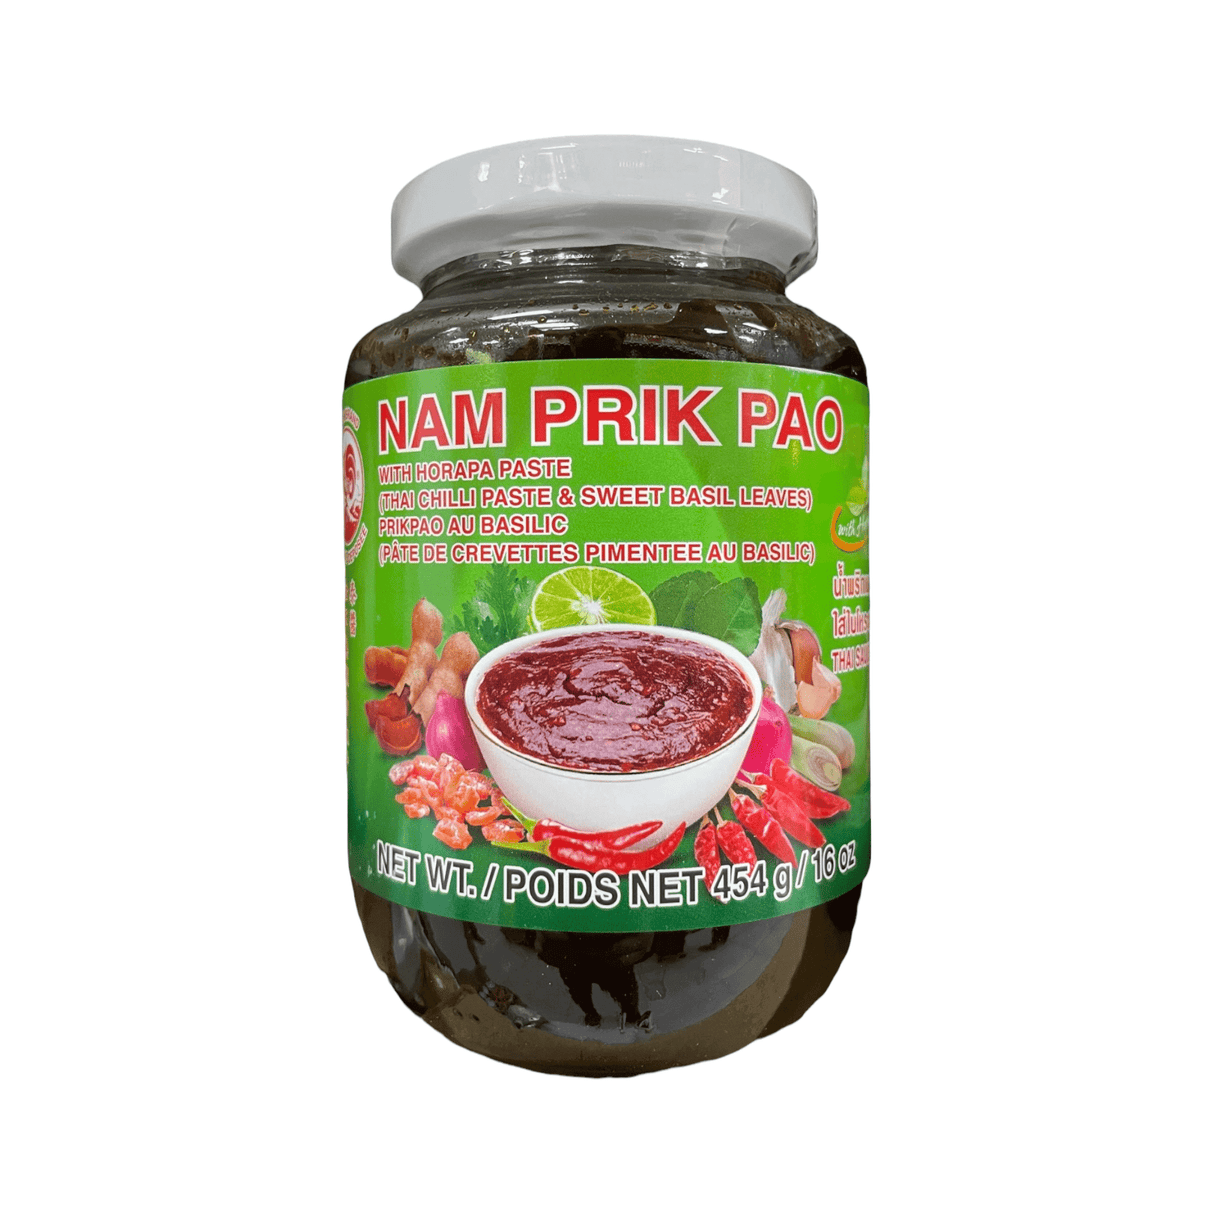 Cock Brand Thai Chilli Paste & Sweet Basil Leaves (Nam Prik Pao)